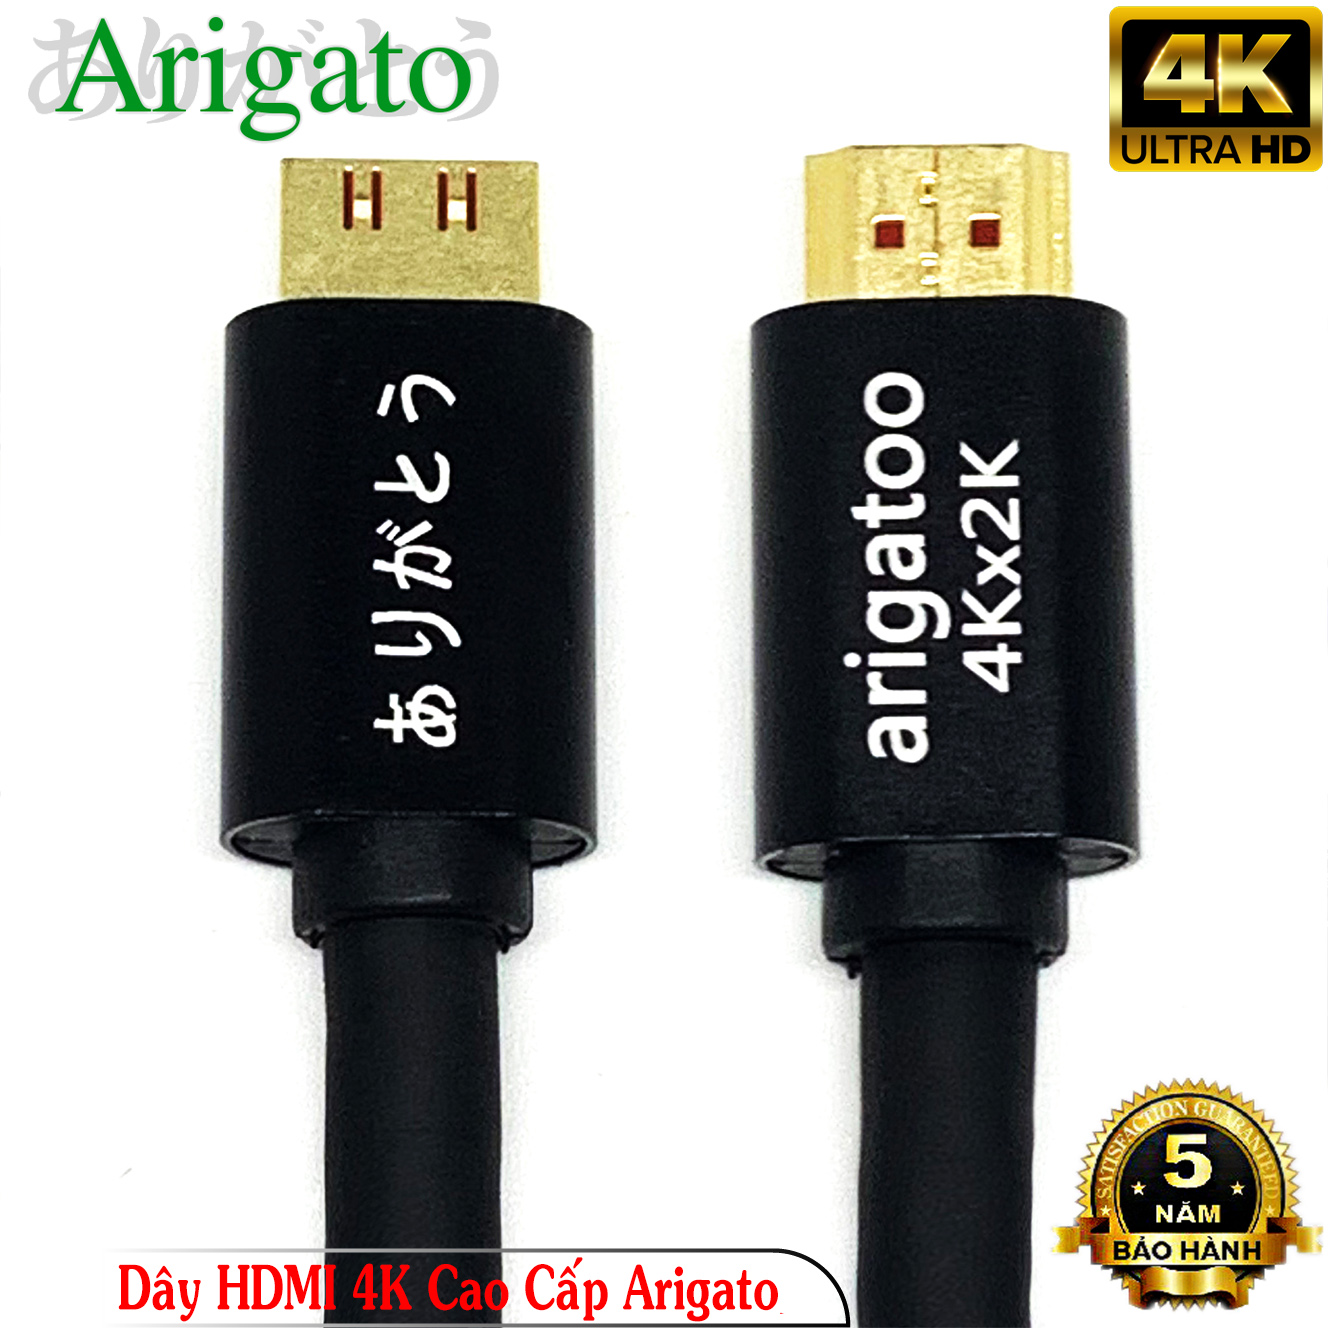 Dây HDMI 4k Cao Cấp Arigato 3m